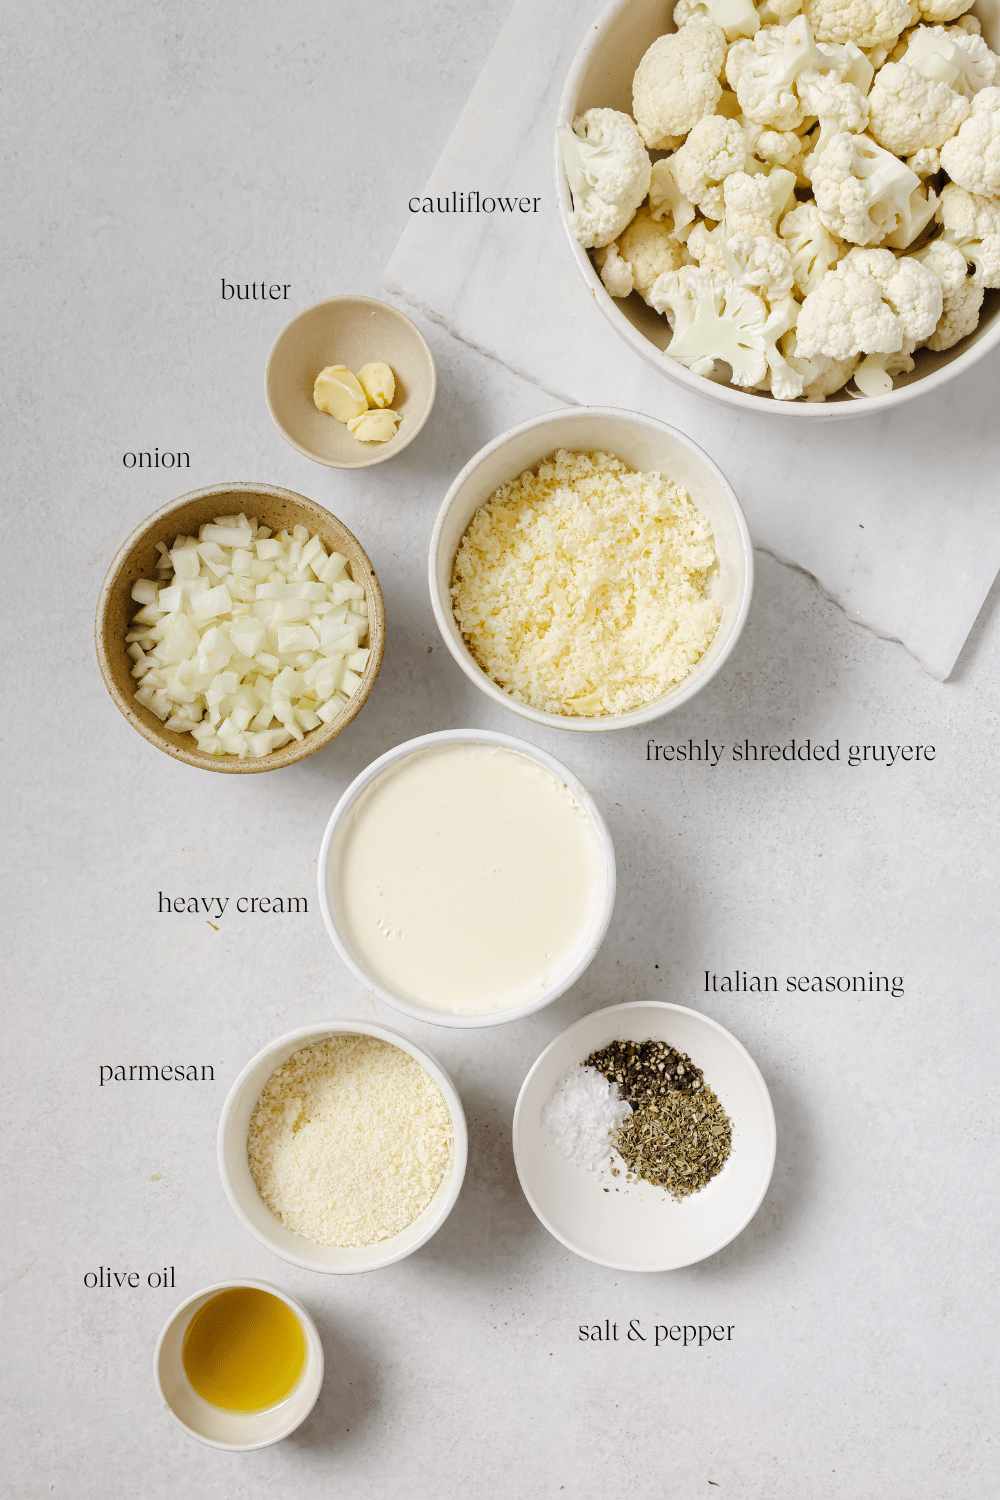 Pre-measured ingredients for cauliflower au gratin. 